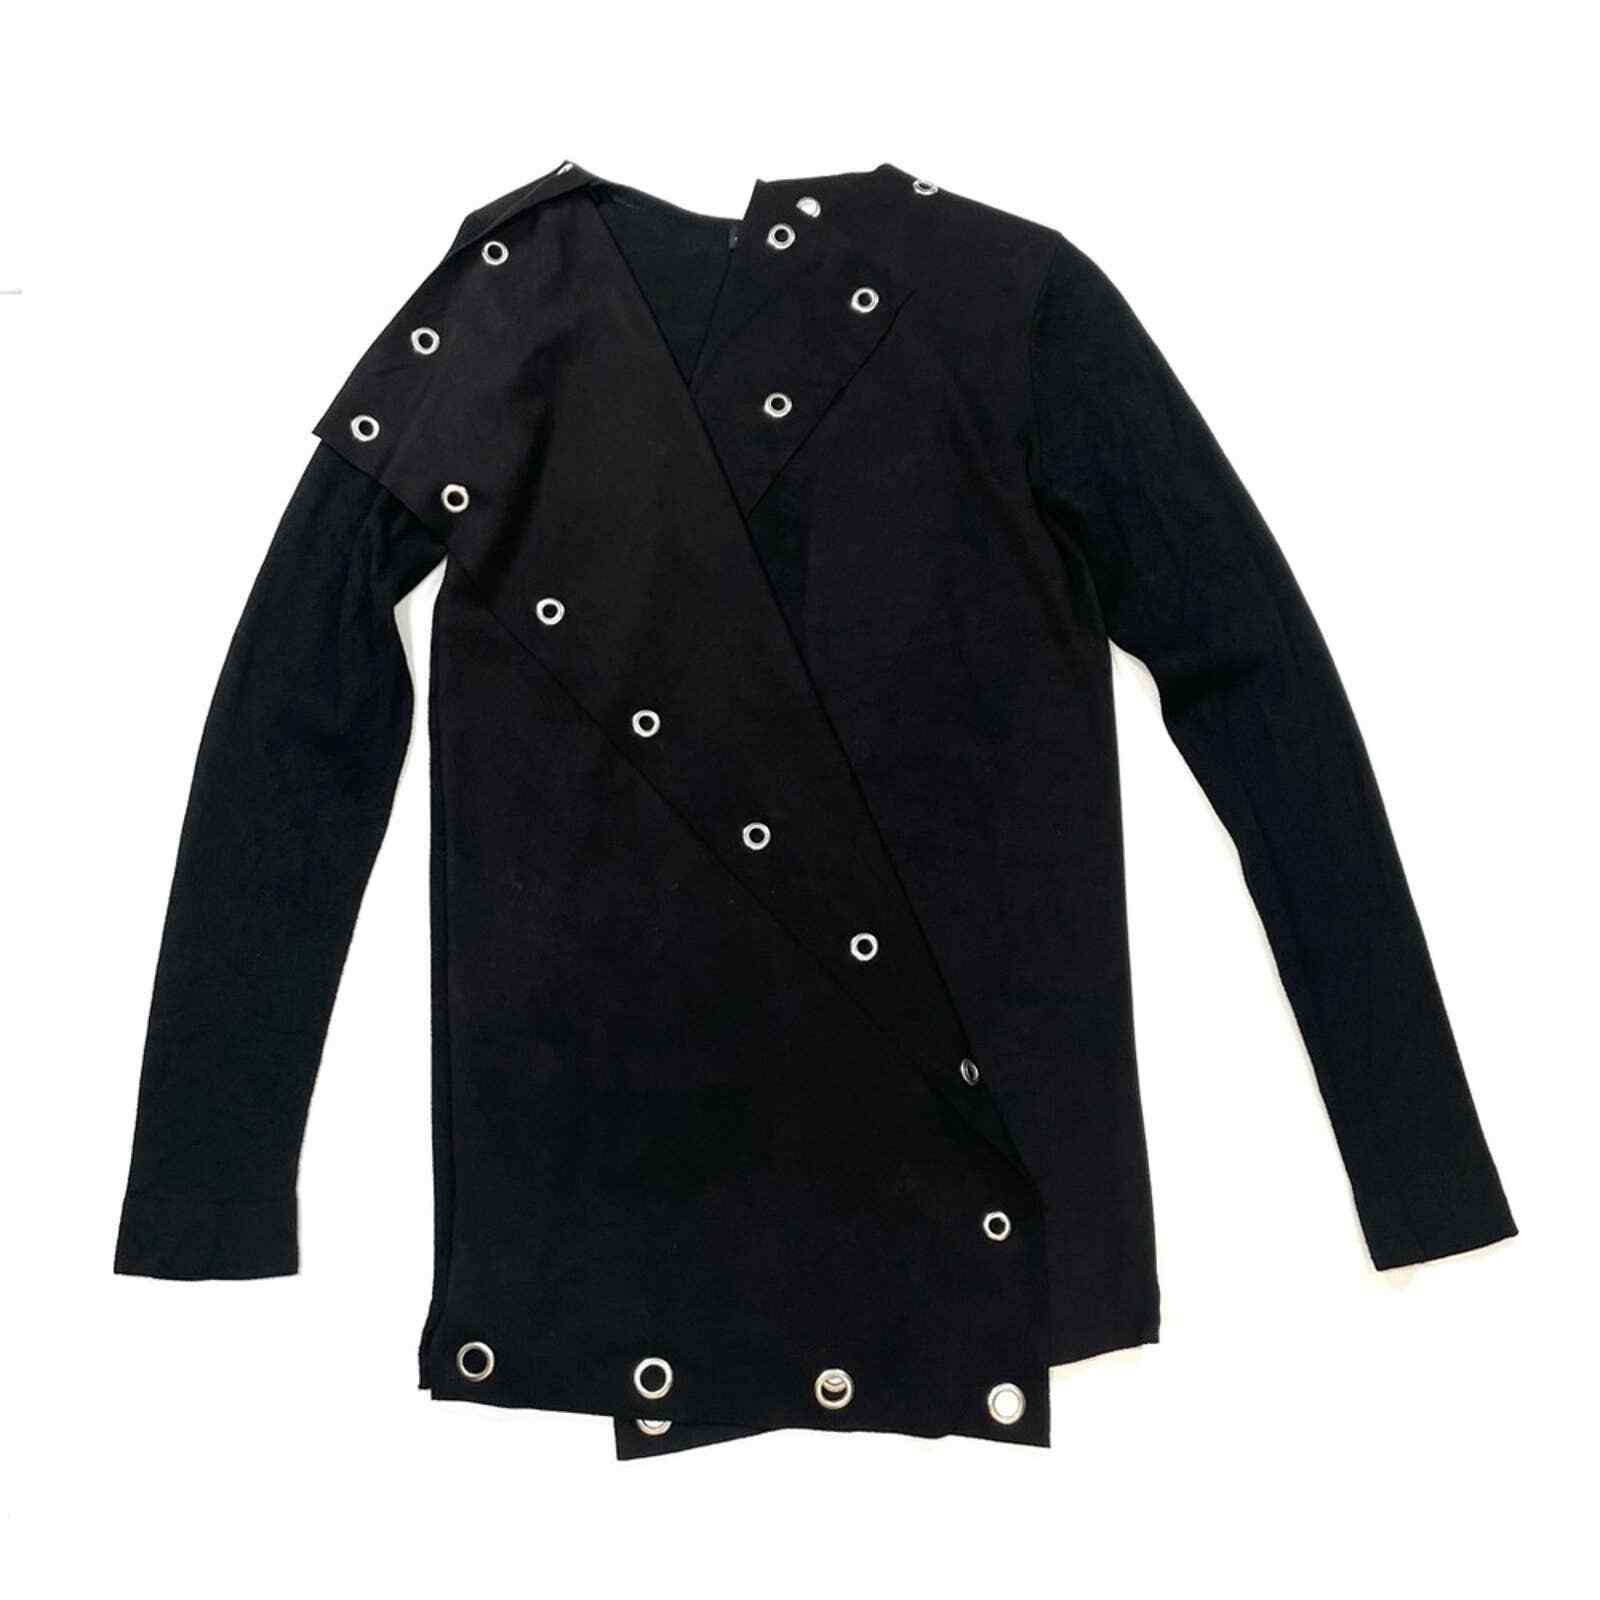 Zara Faux suede black open front embellished asym… - image 1